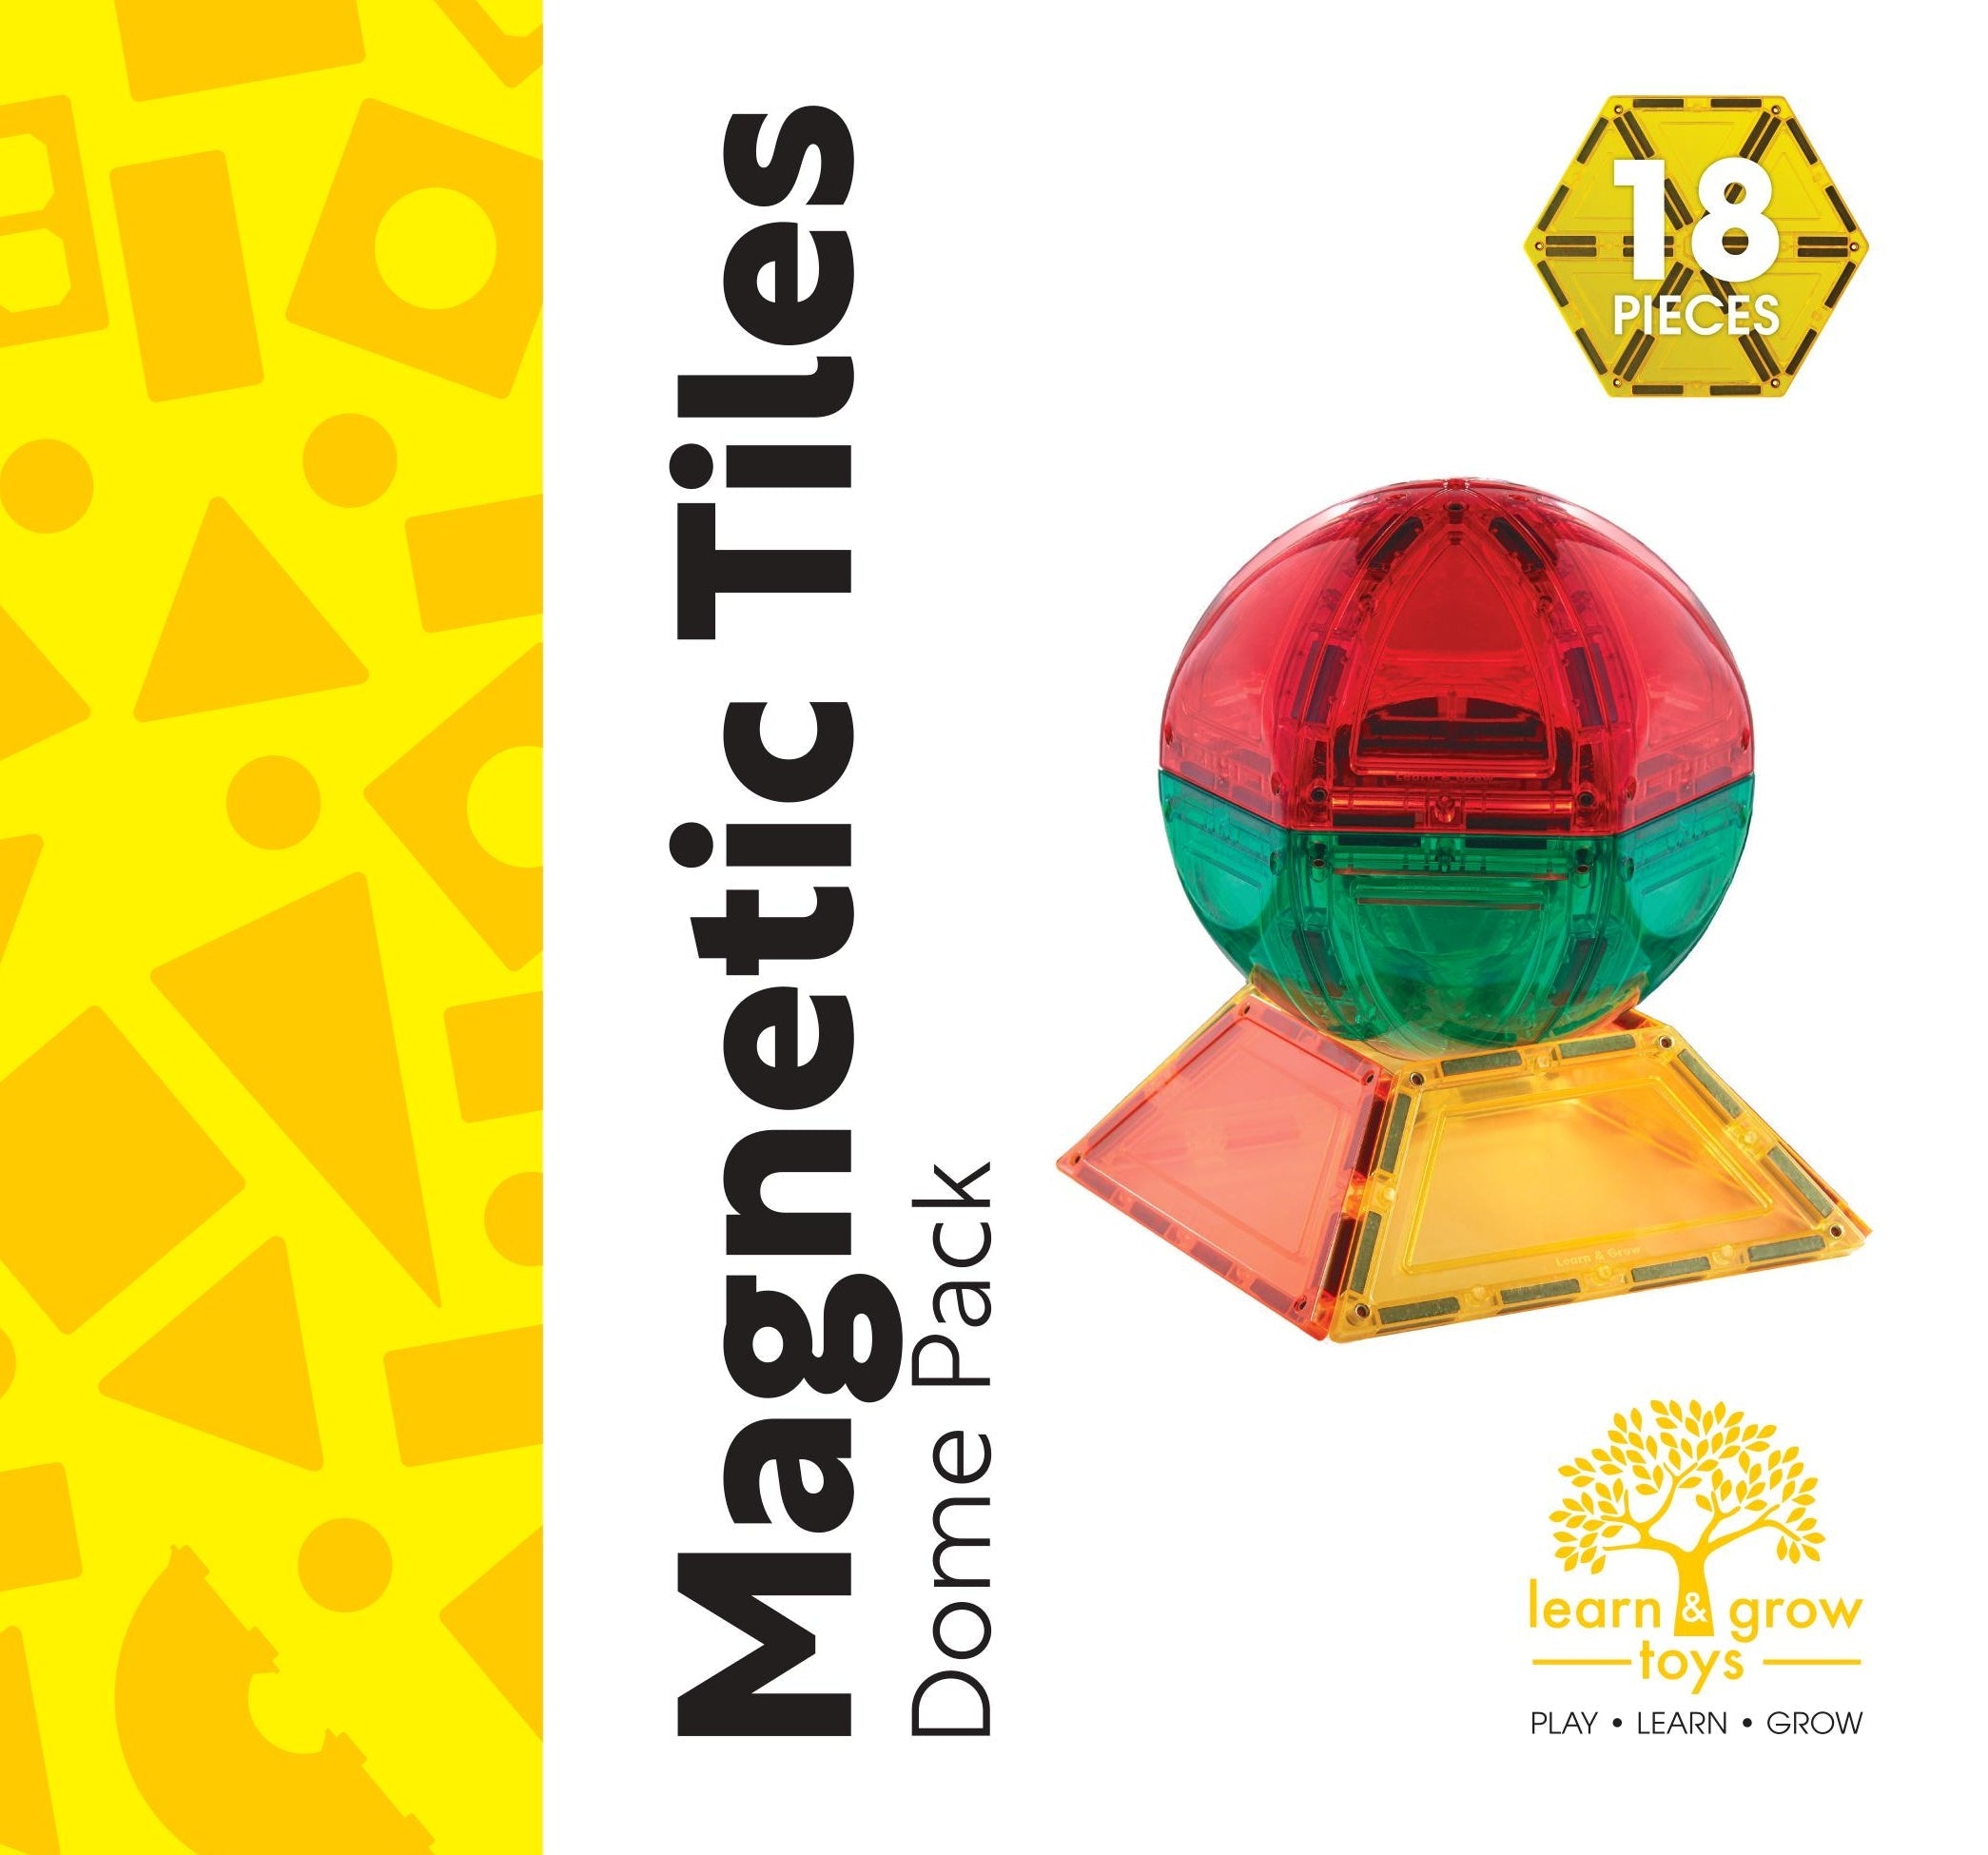 Magna Tiles Ideas: 17 Creative Builds for a Fun Imaginative Play